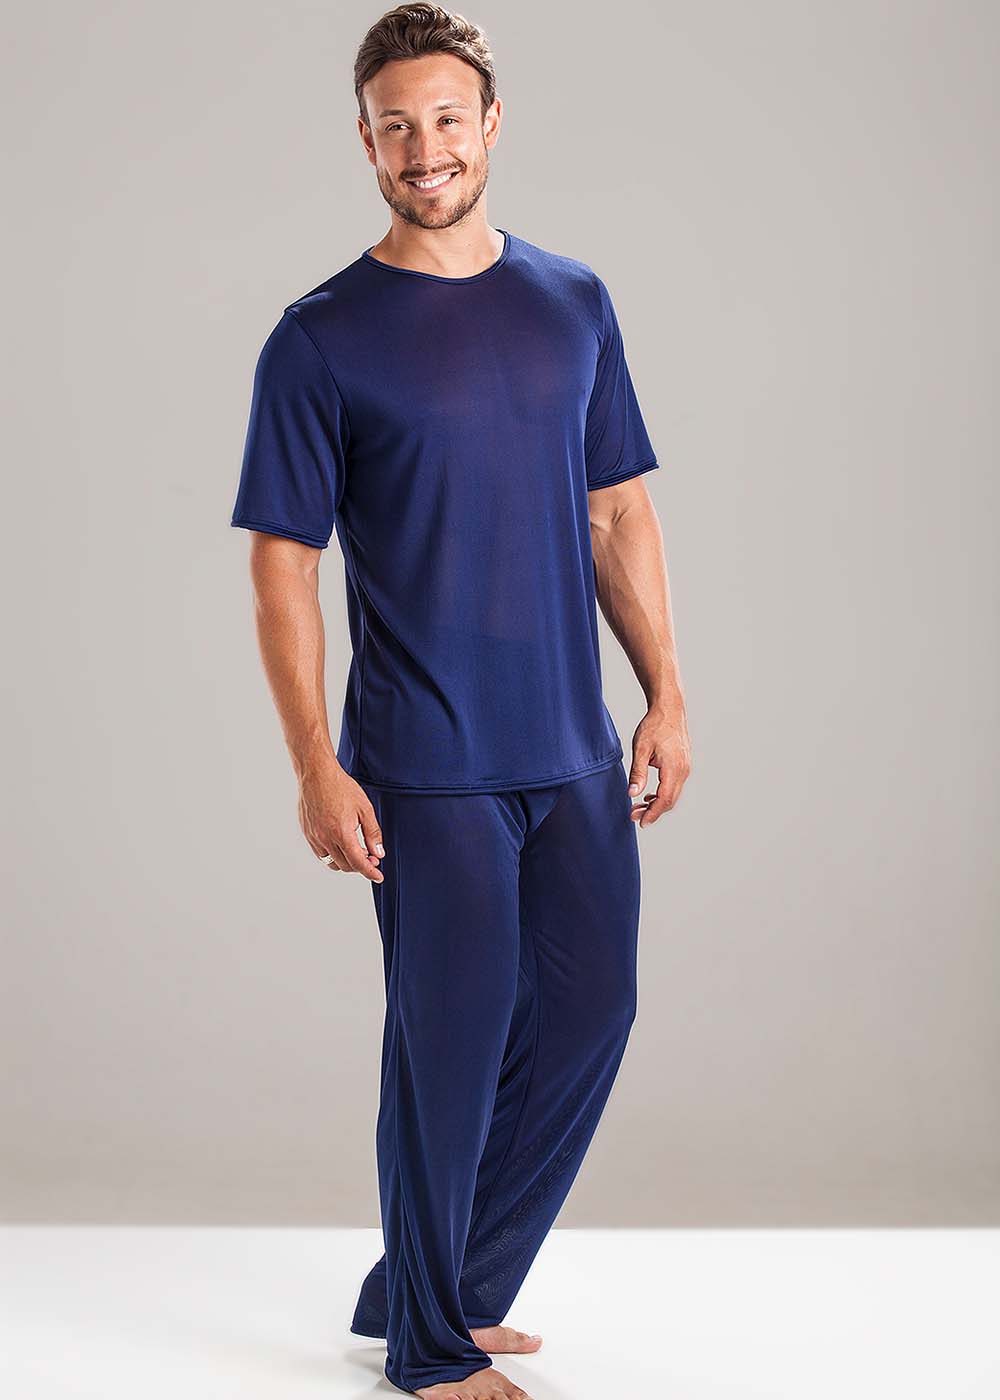 Navy silk jersey T shirt & lounge pants